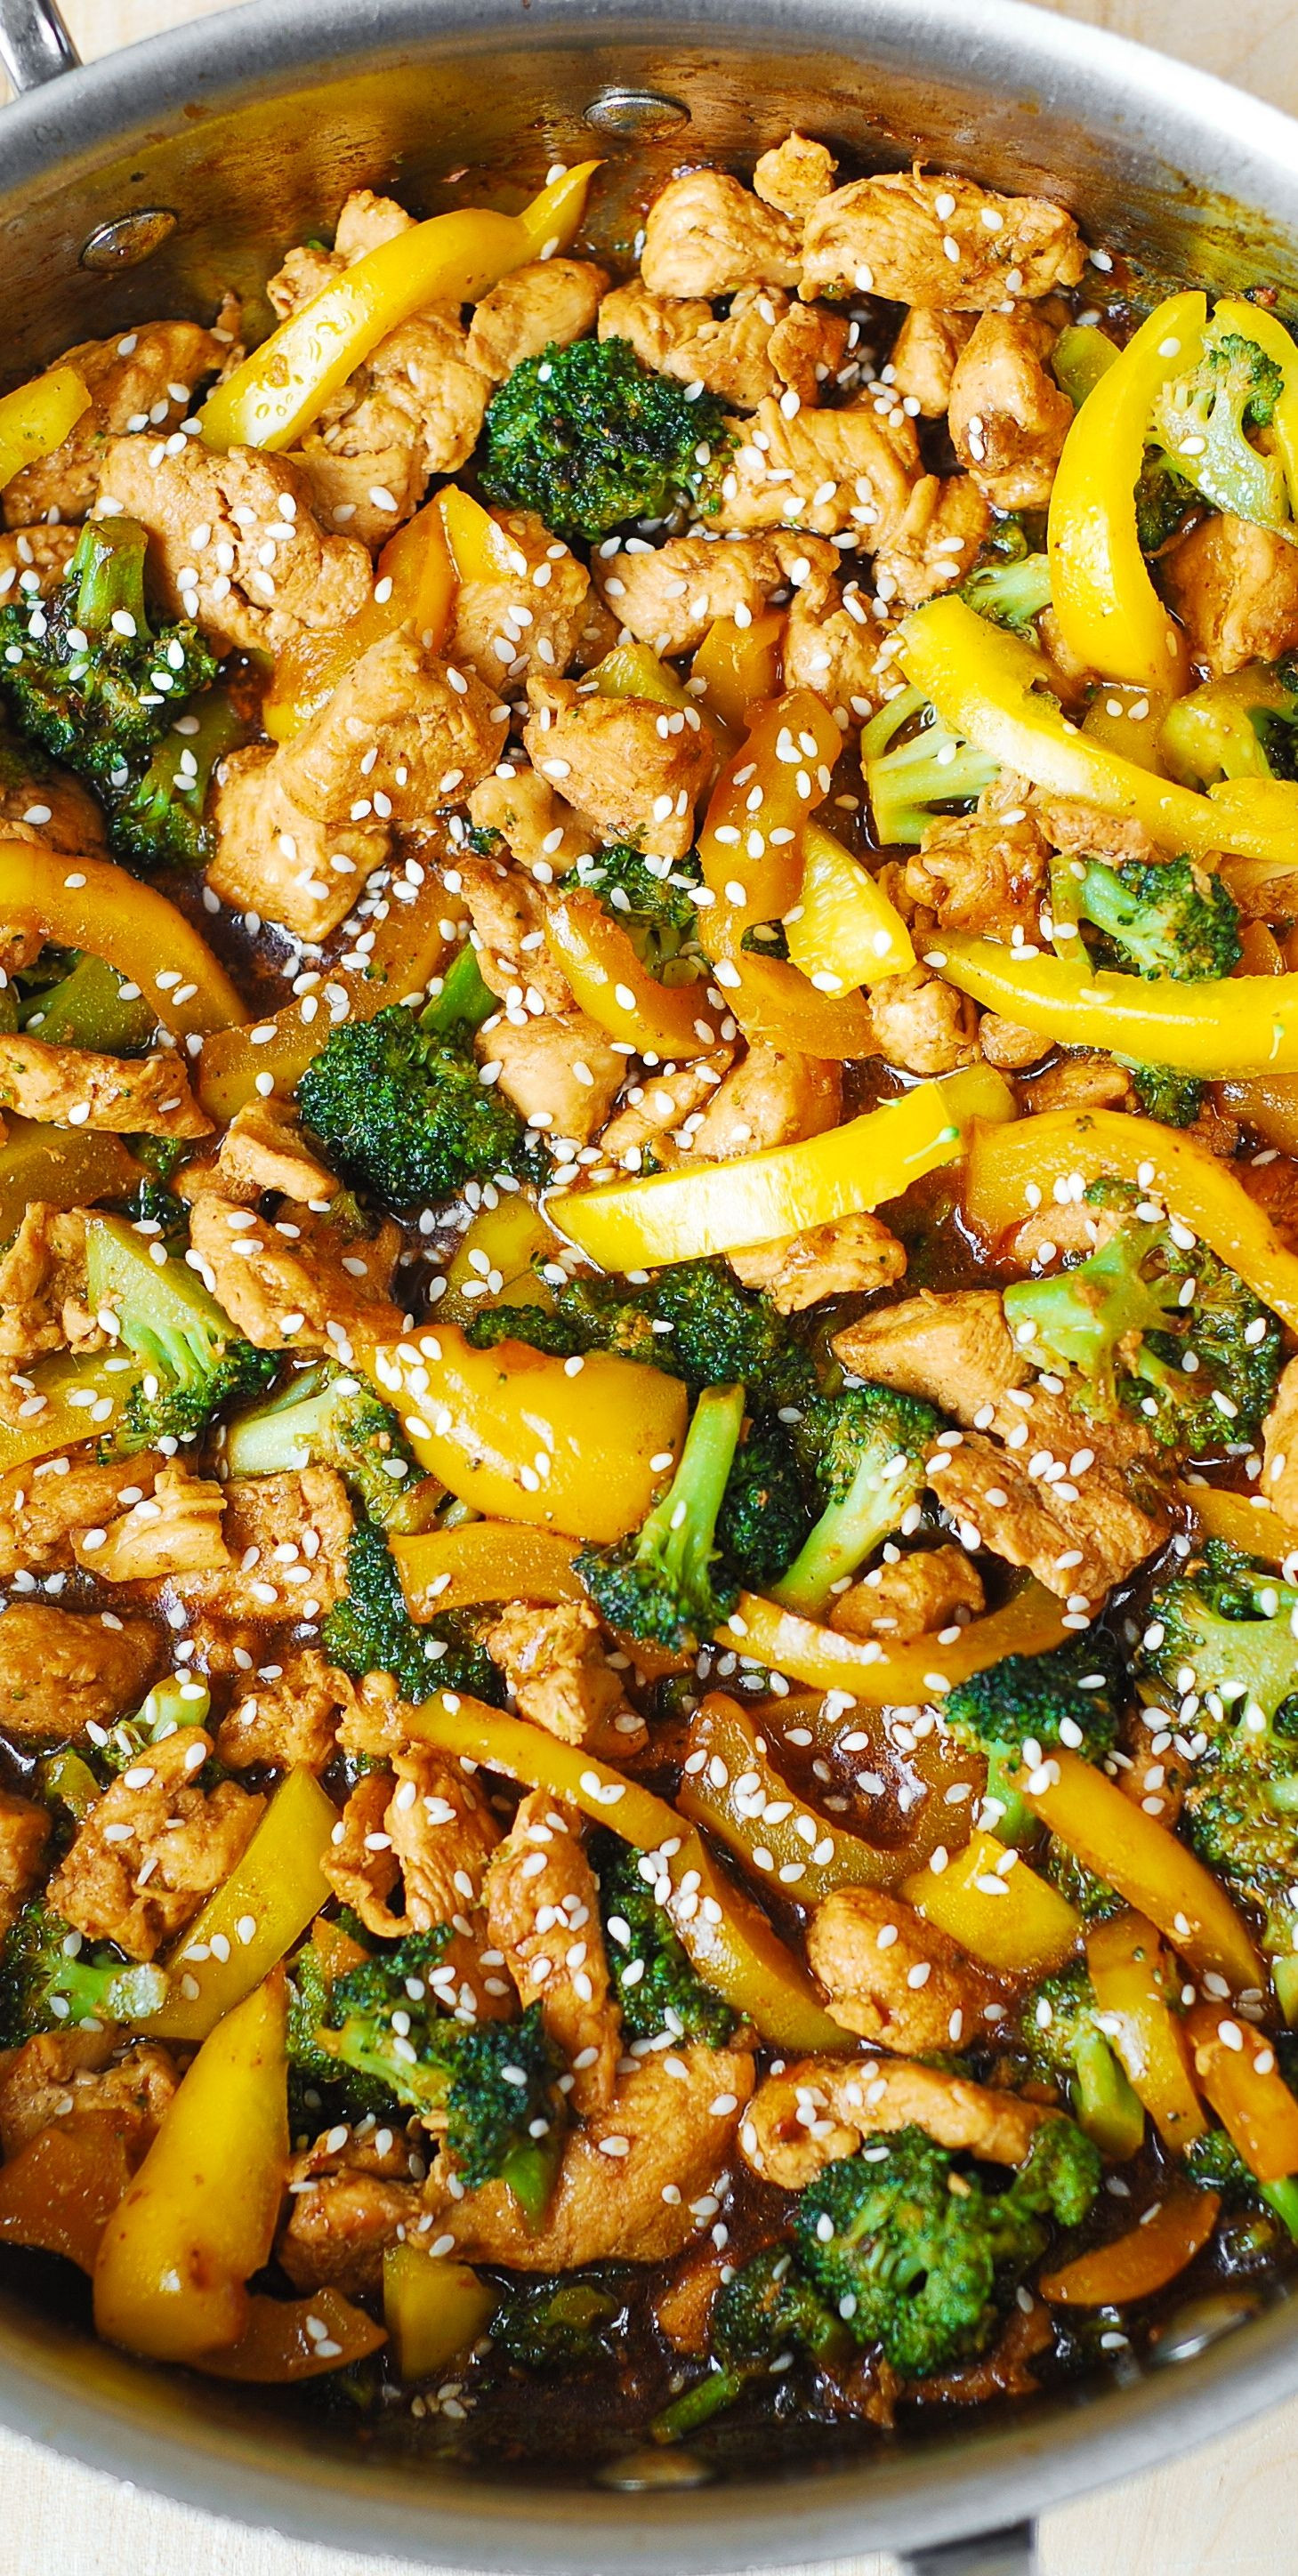 Low Fat Chicken Dinner Recipes
 Best 25 Low fat meals ideas on Pinterest